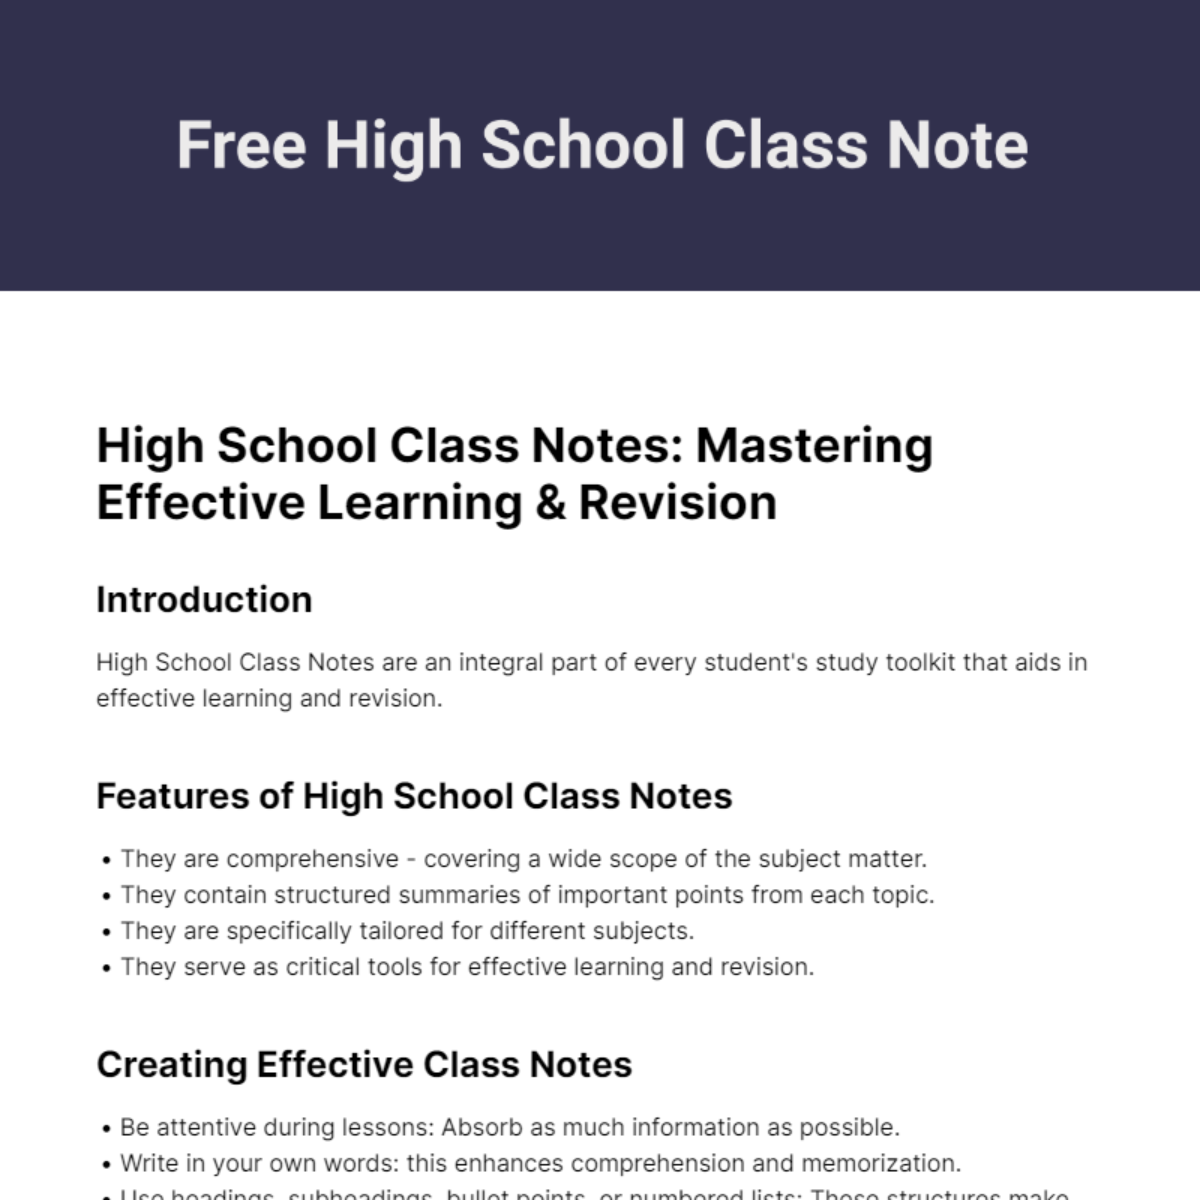 Free High School Class Note Template